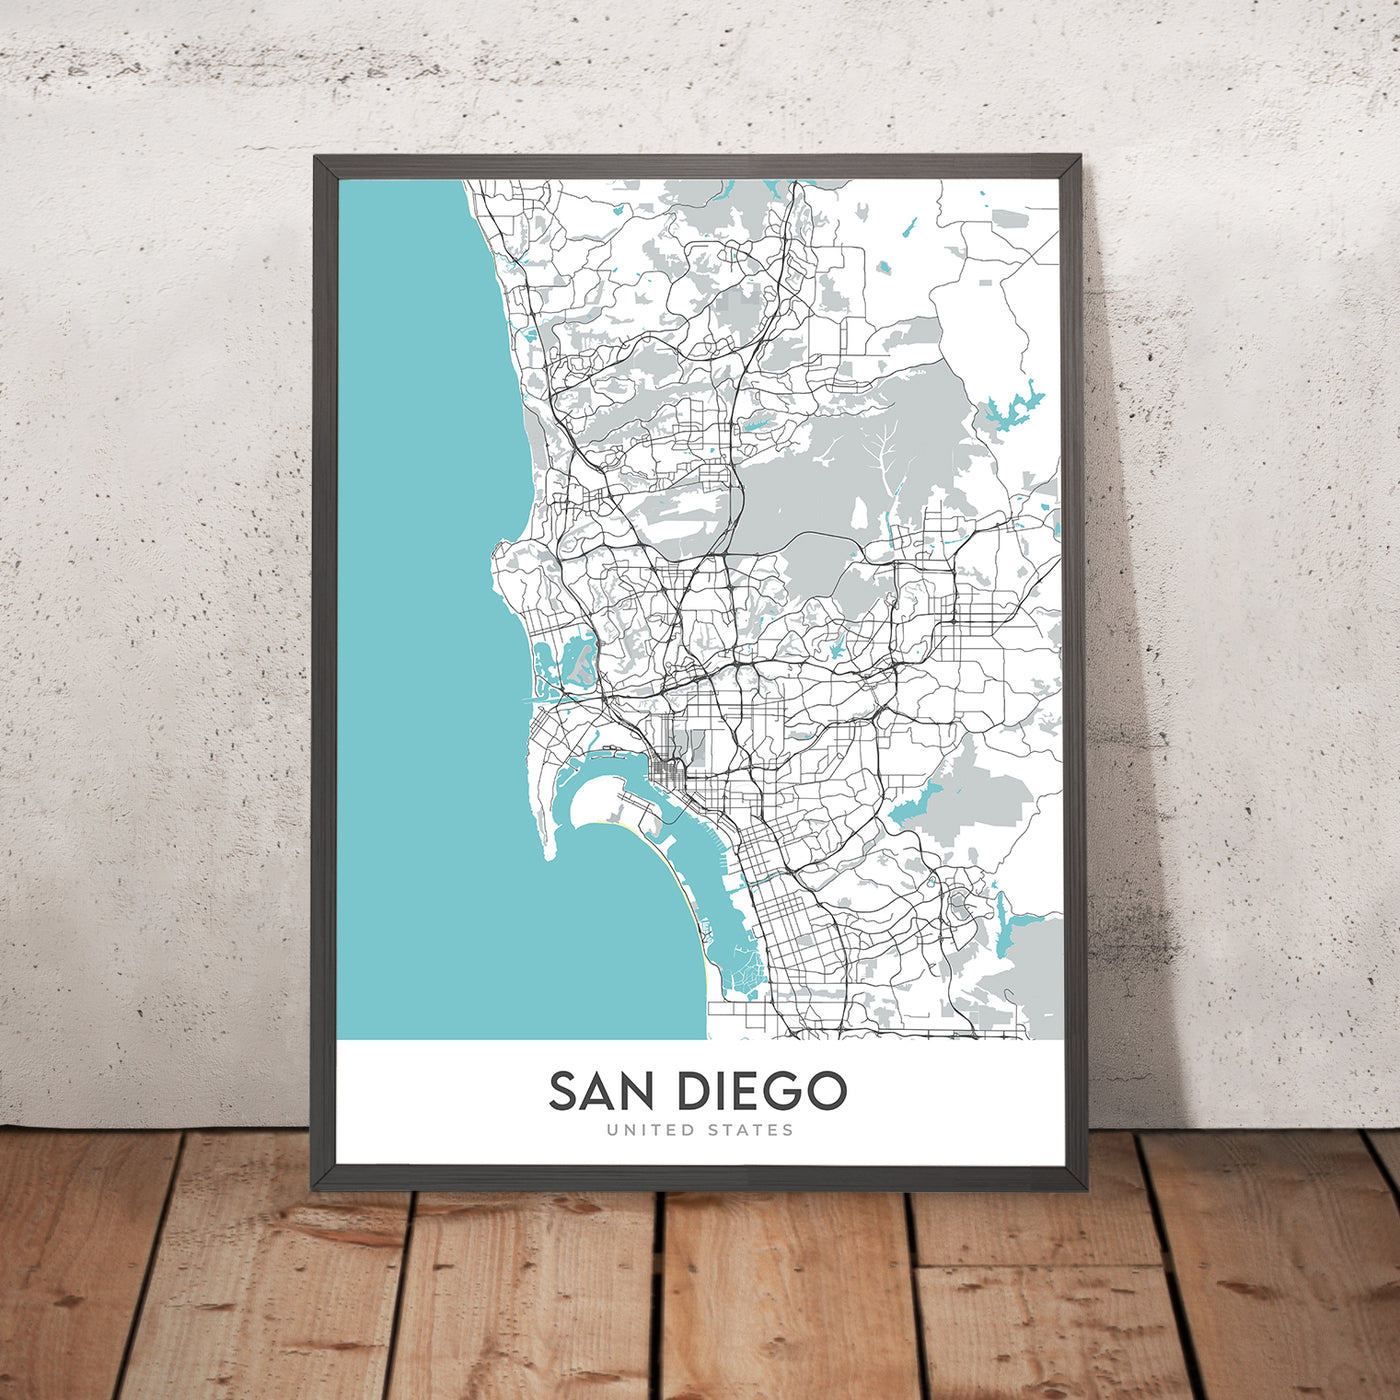 Modern City Map of San Diego, CA: Balboa Park, Gaslamp Quarter, La Jolla, Mission Beach, Pacific Beach